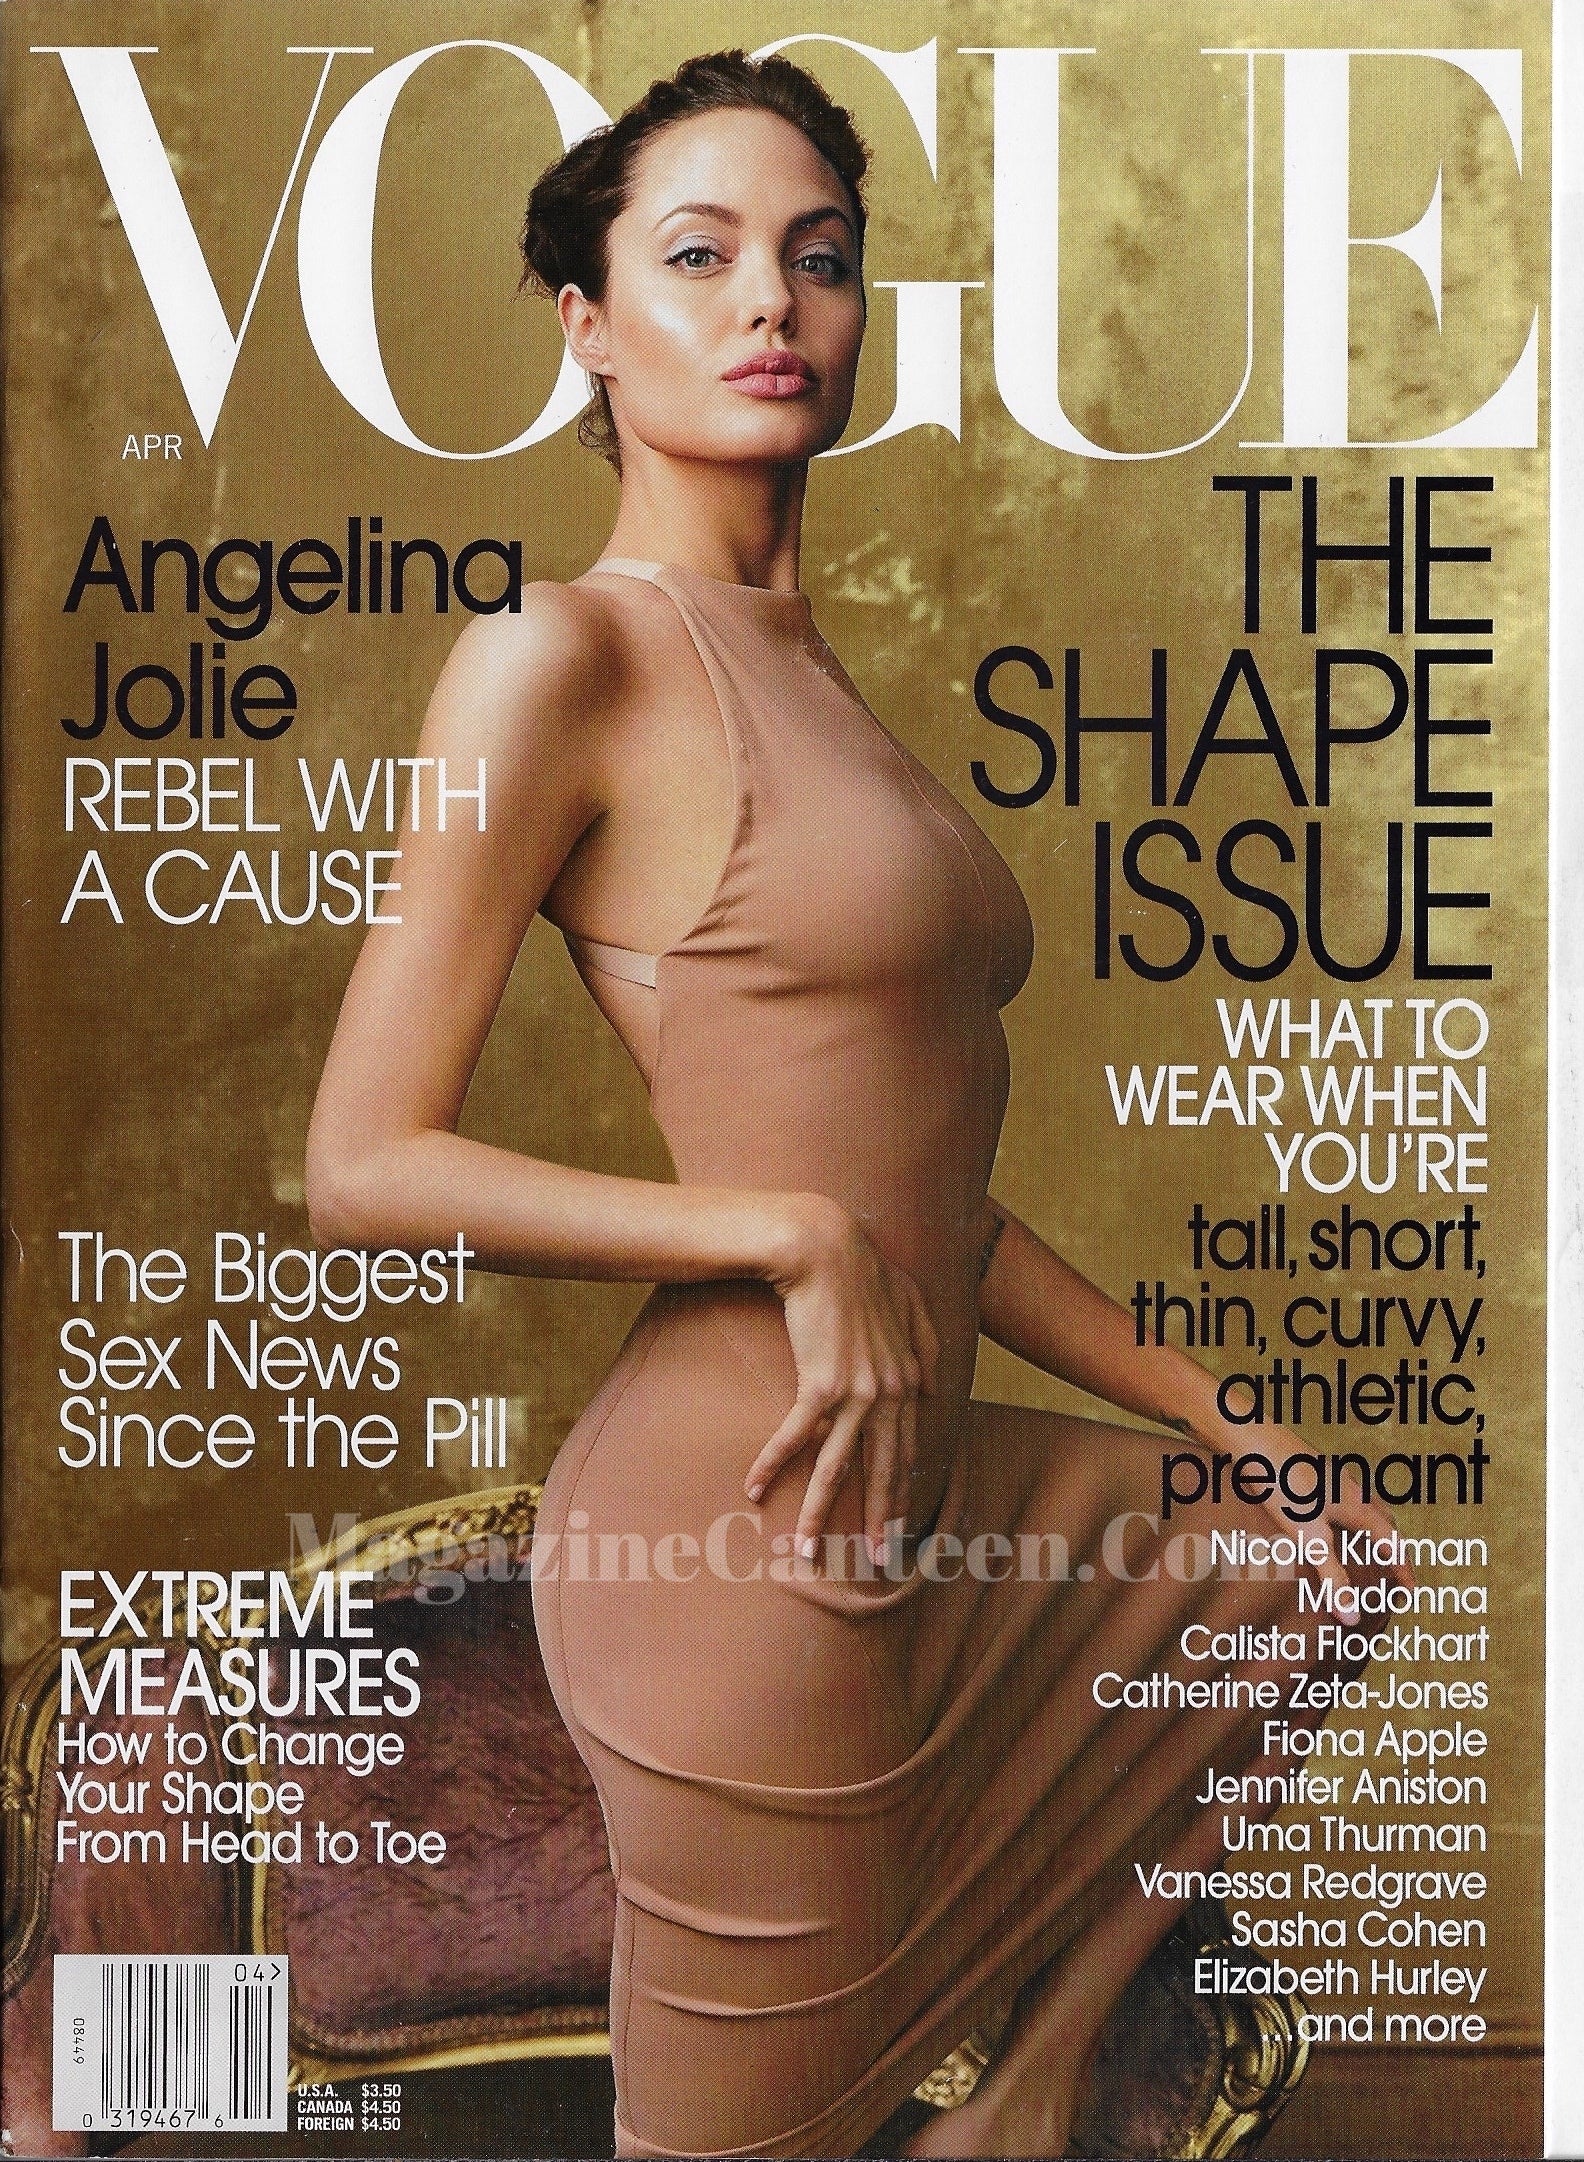 Vogue USA Magazine April 2002 - Angelina Jolie